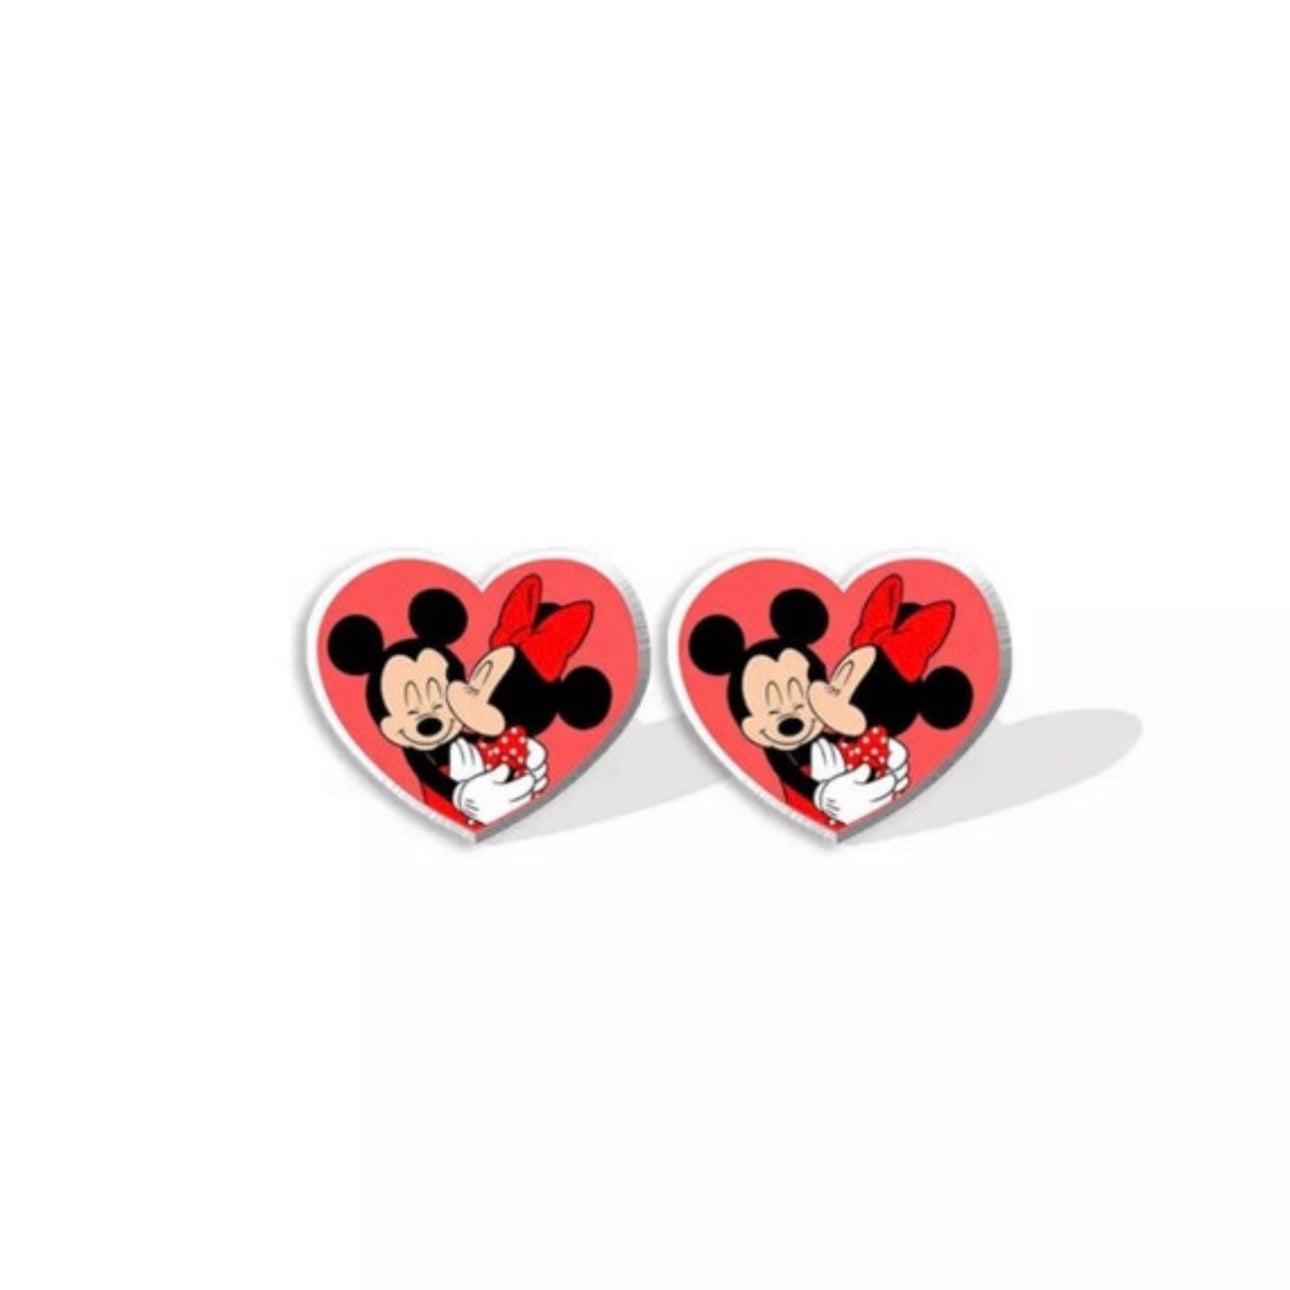 Valentine’s Day Earrings - Valentine Earrings, Handmade Earrings, Valentine’s Day Jewelry, Heart Studs, Pink Hearts, Stud Earrings